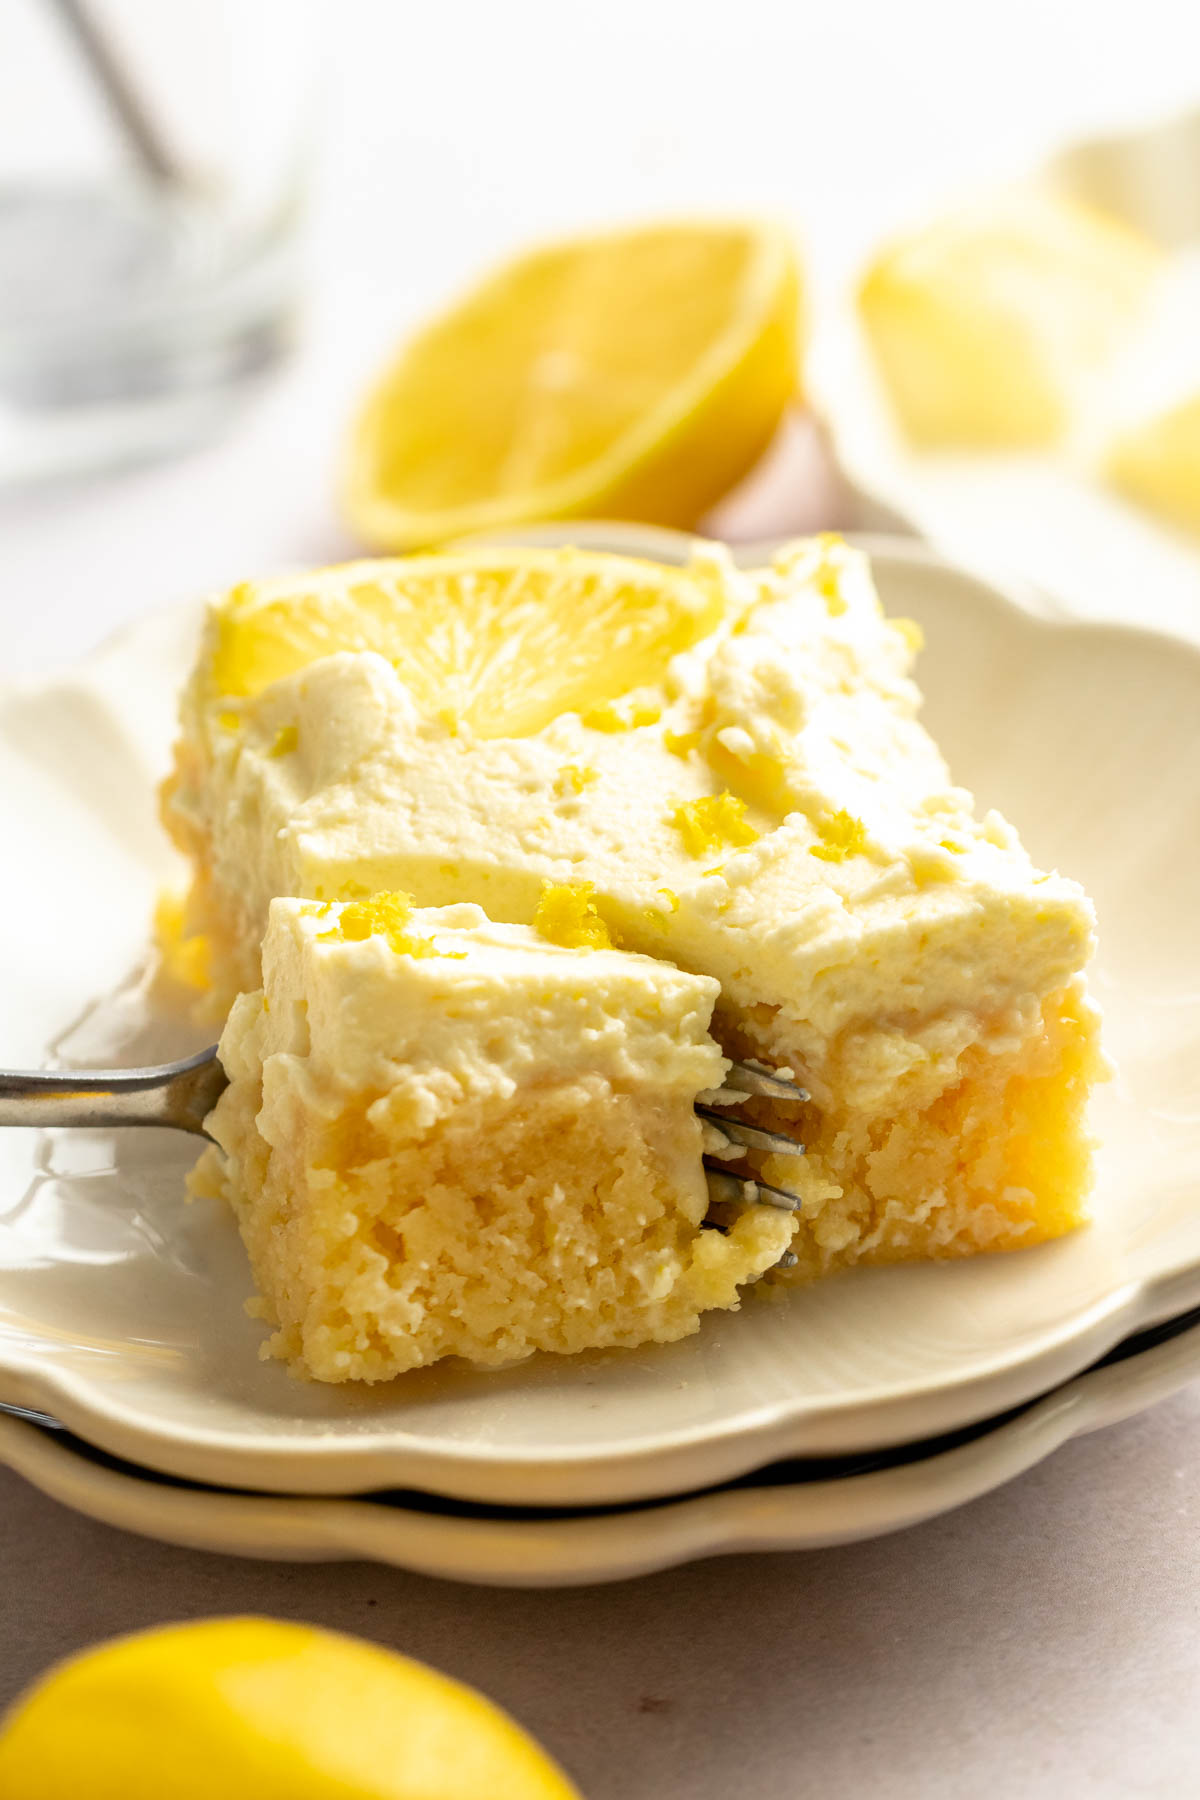 Slice of lemon poke cake on a white plate.